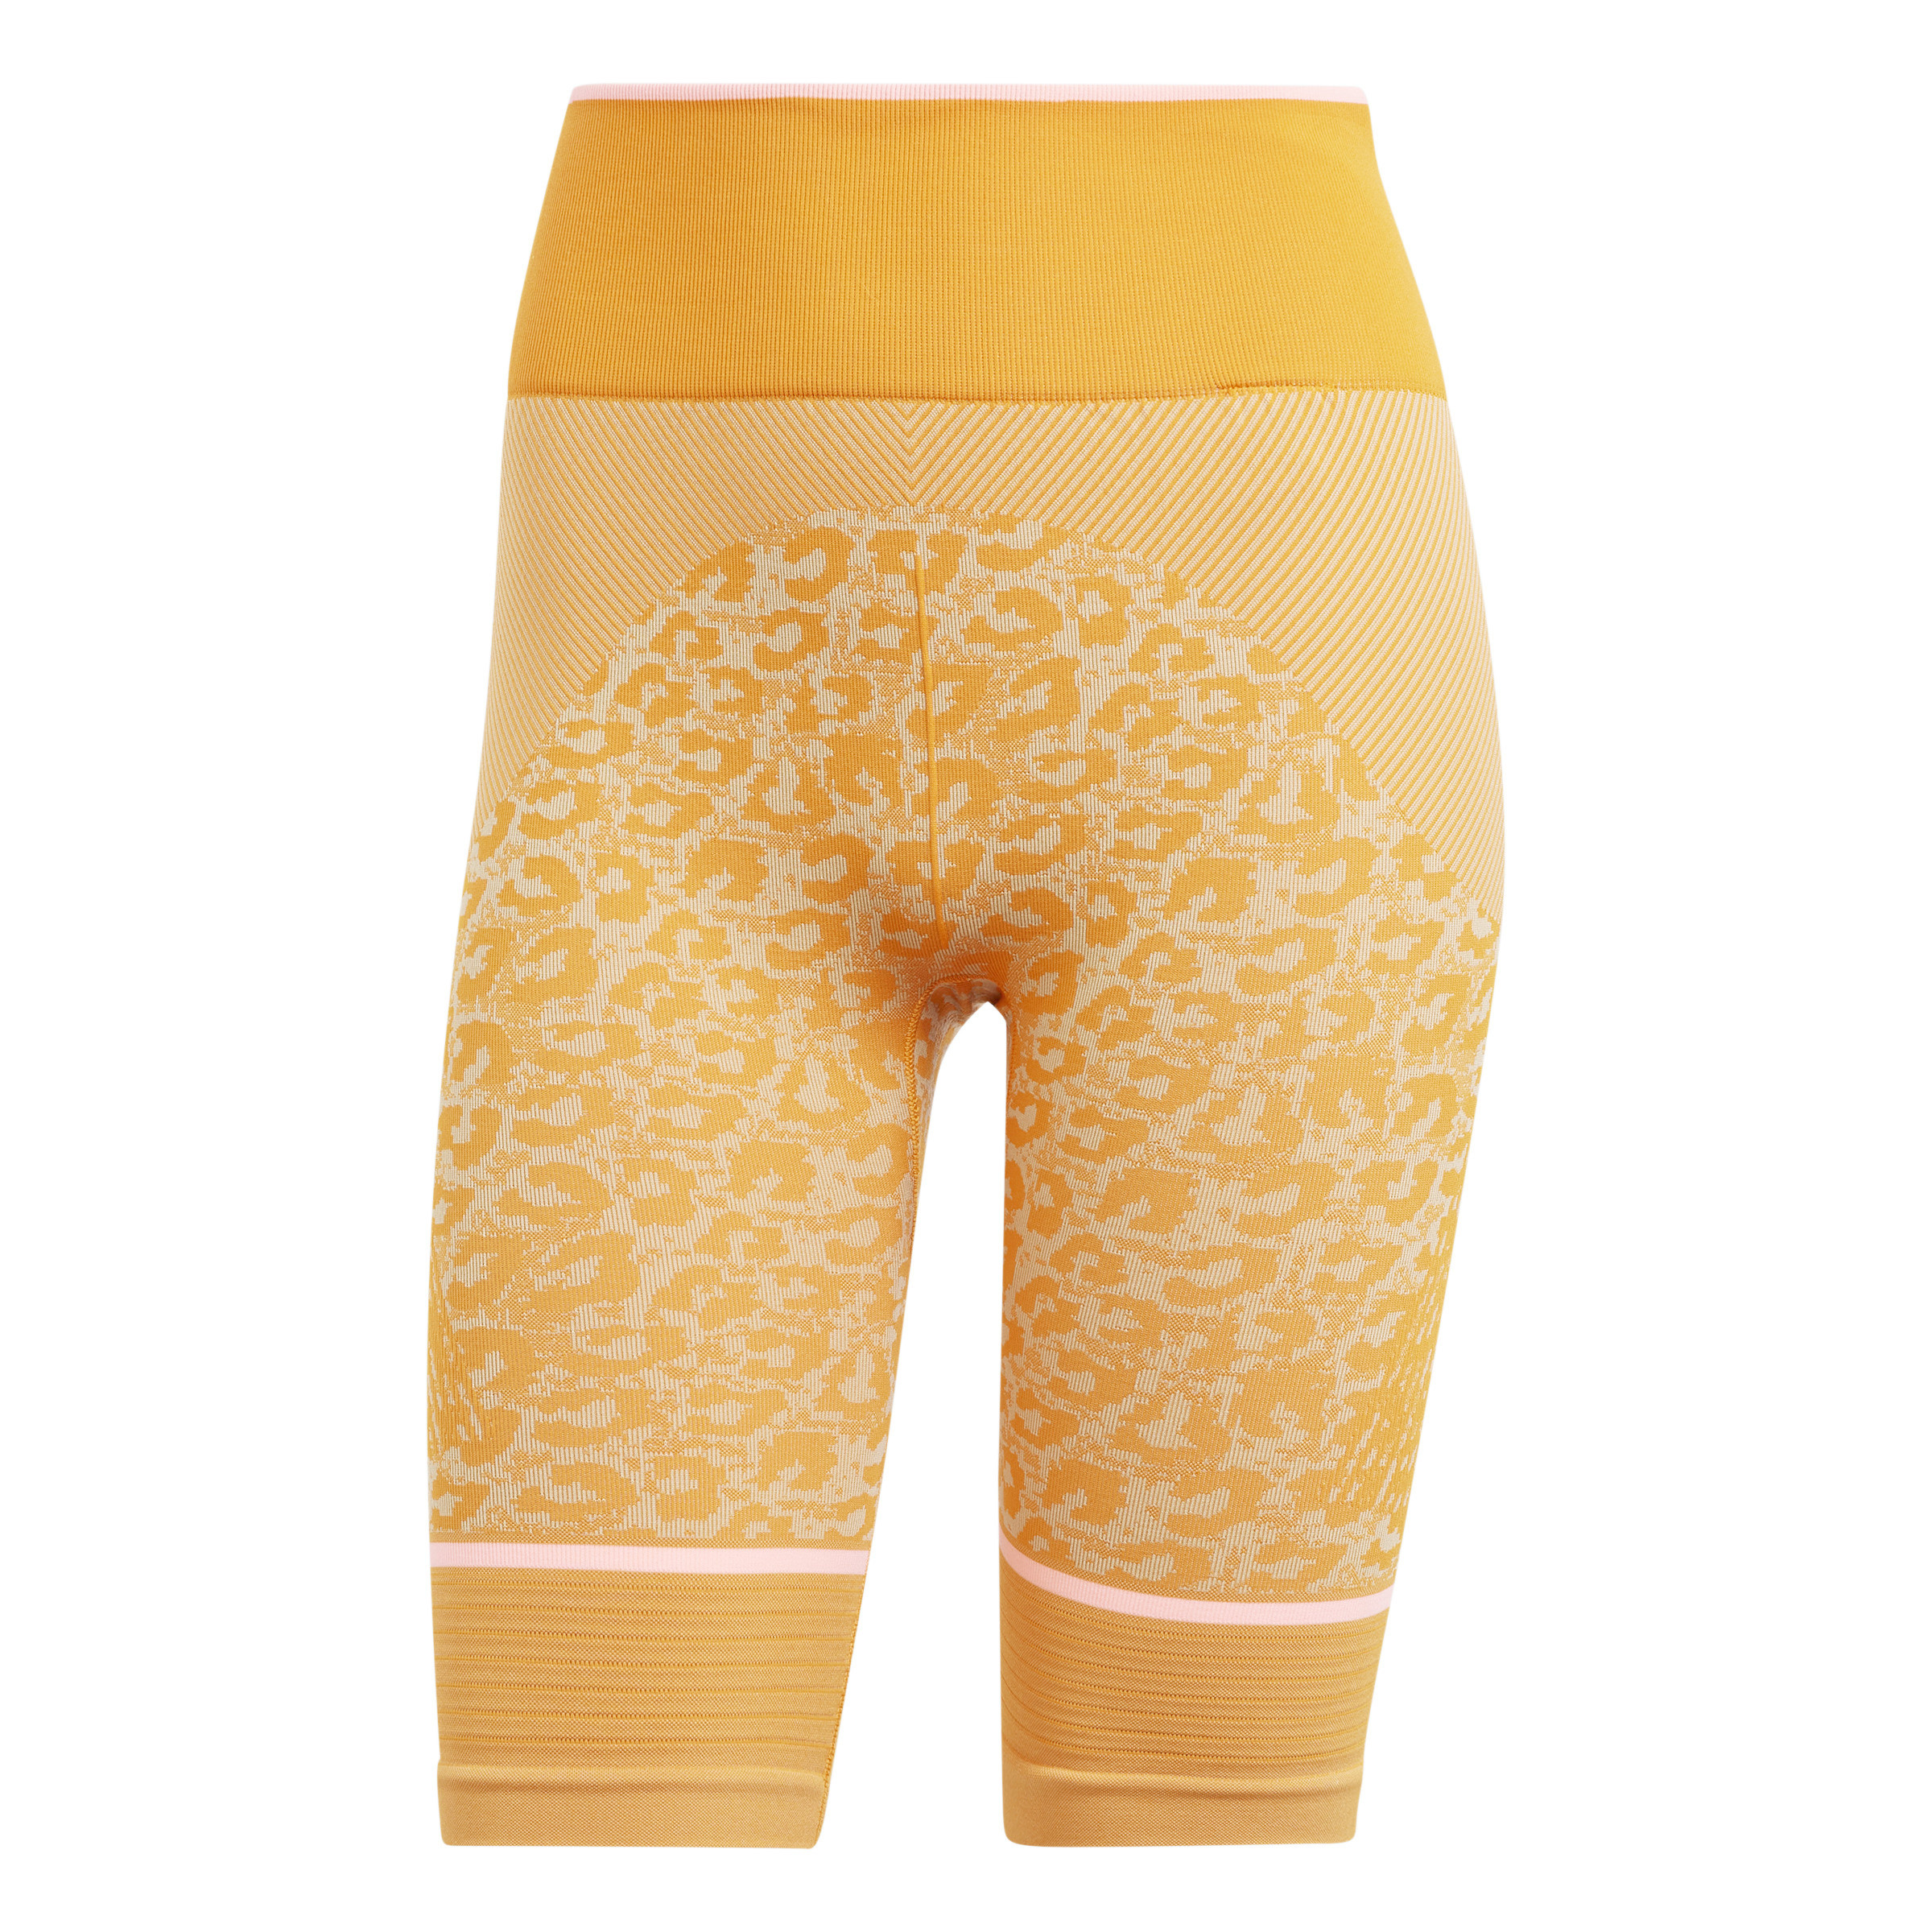 Adidas by Stella McCartney - TrueStrength Seamless Bike Yoga Leggings, Orange, large image number 0